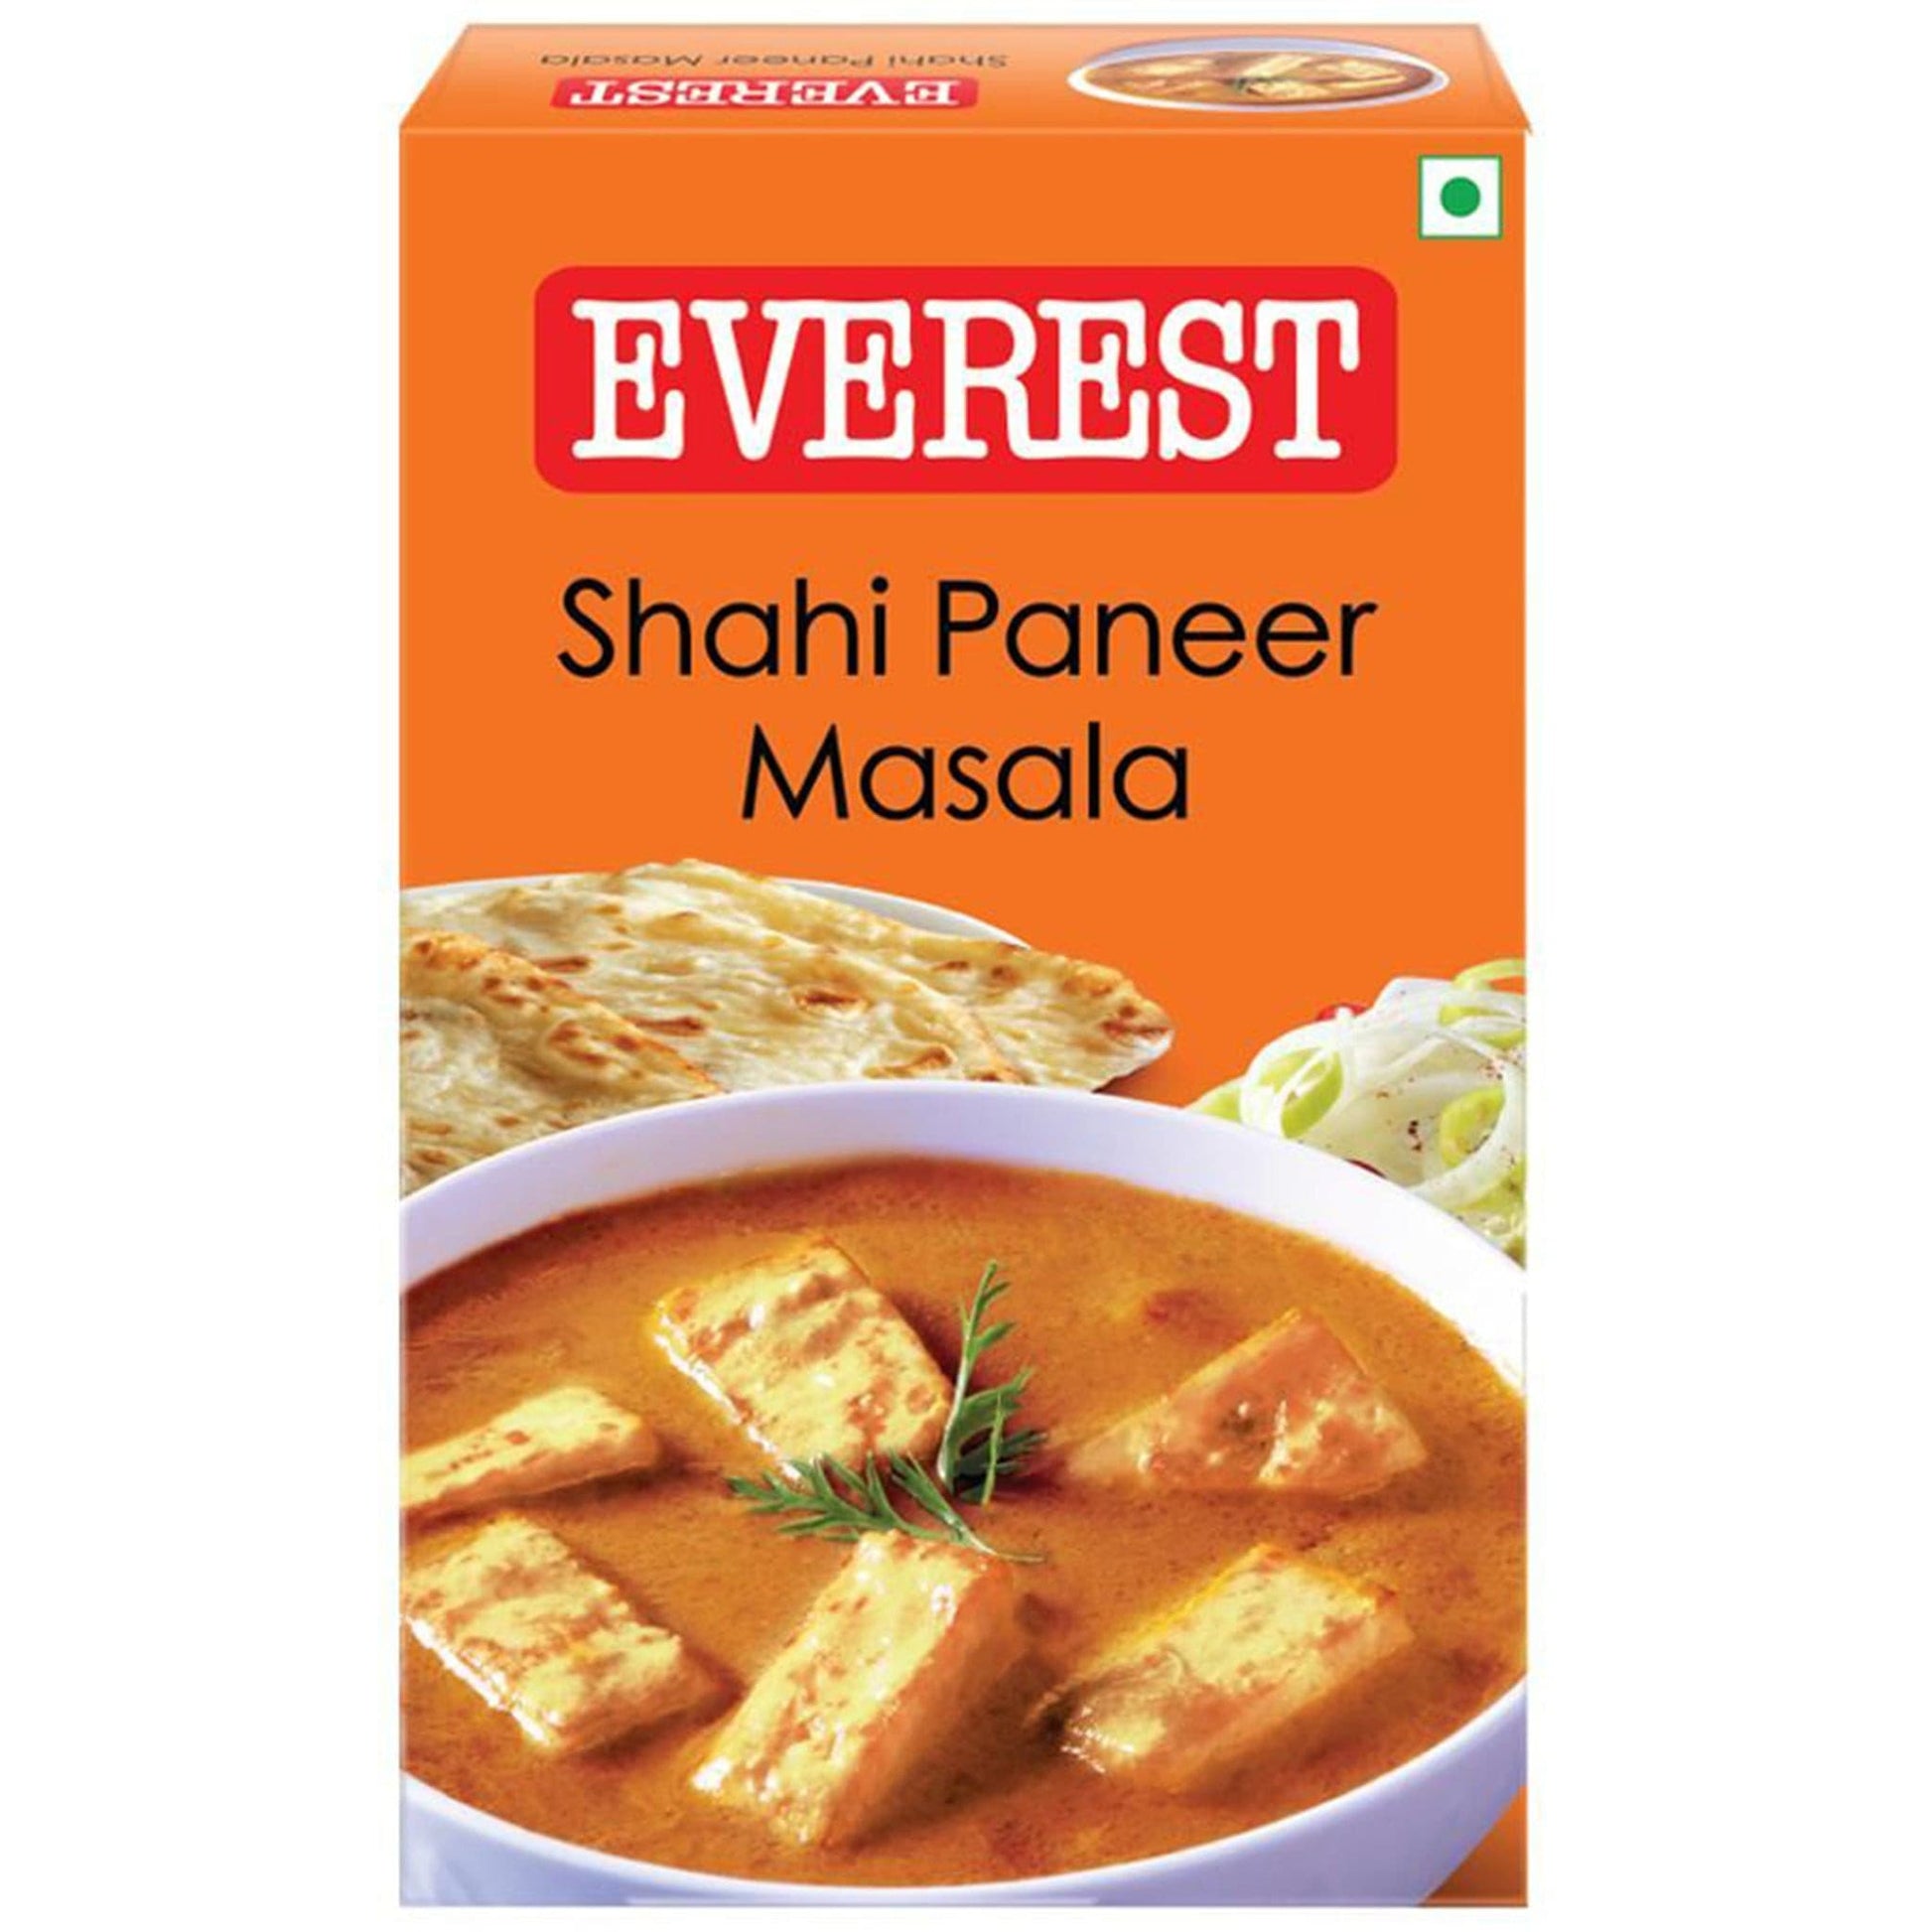 Everest Shahi Paneer Masala (7047392460987)